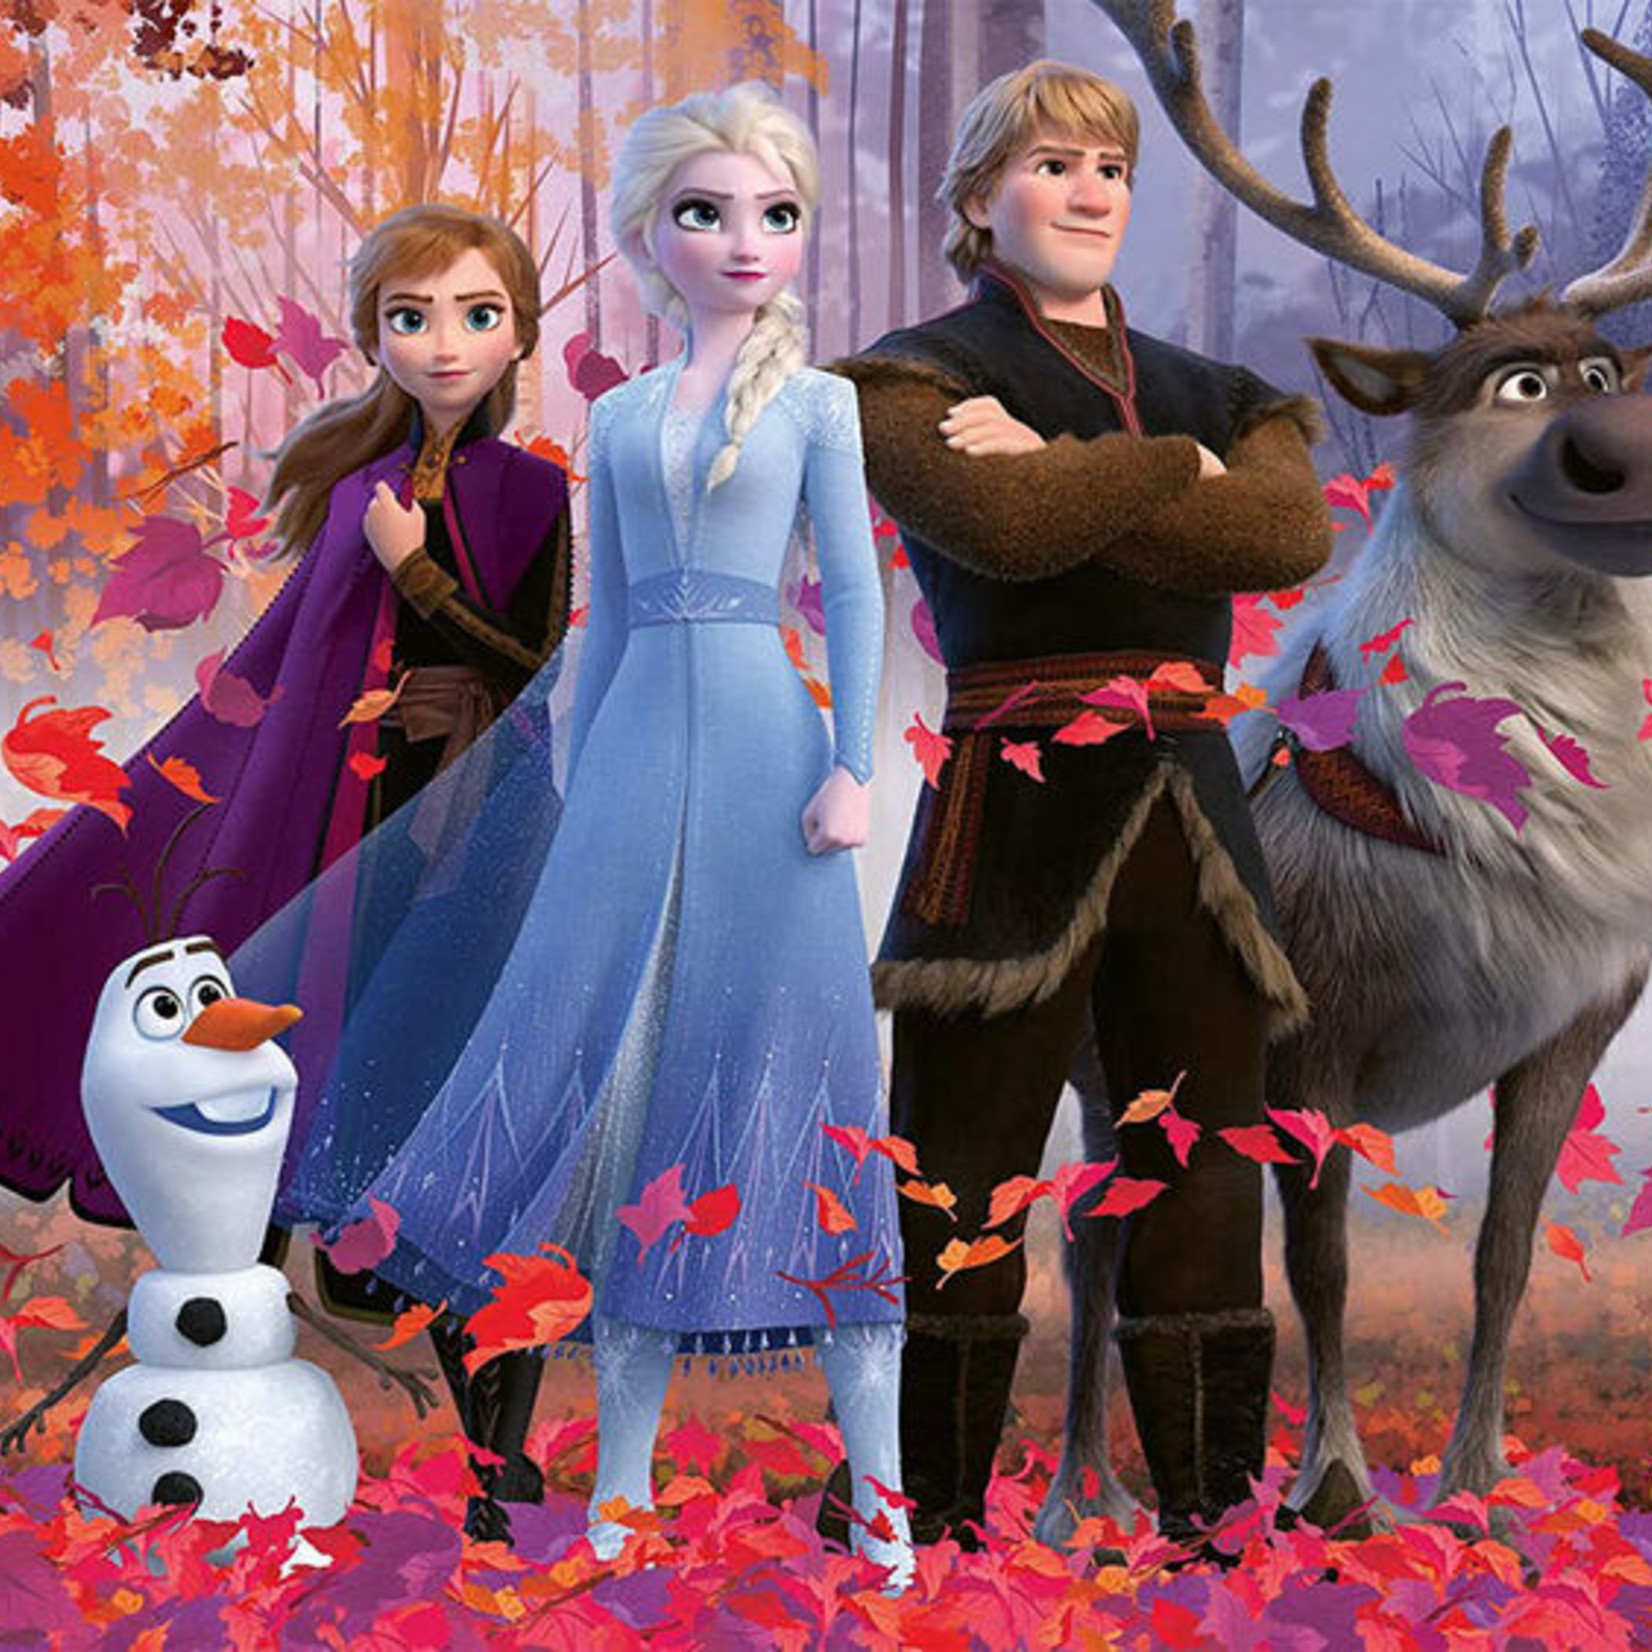 Ravensburger Ravensburger 100XXL : Disney Frozen II - La magie de la forêt